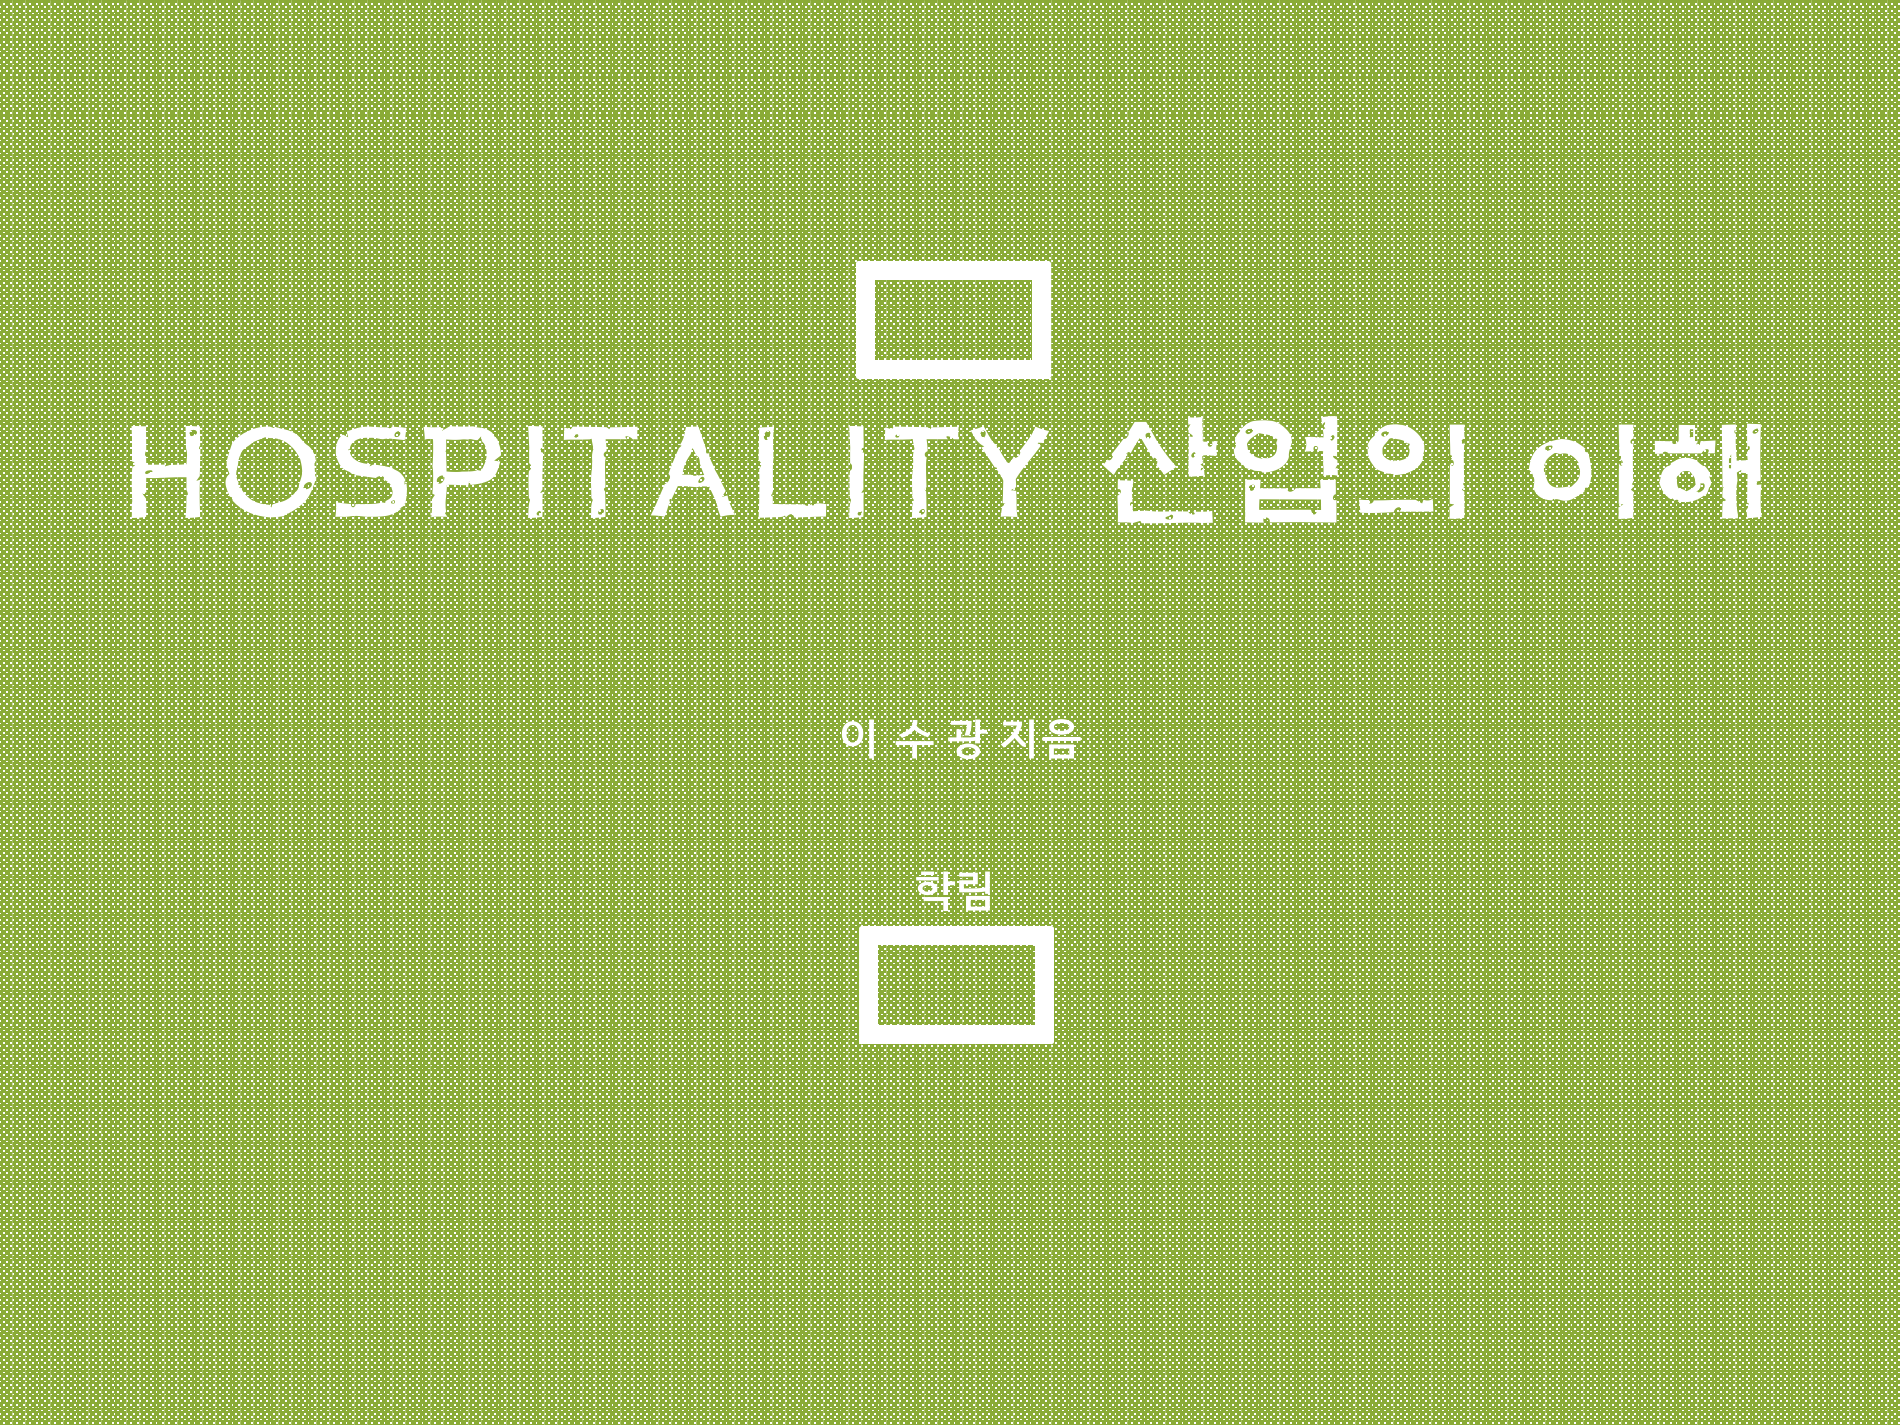 Hospitality 산업의 이해